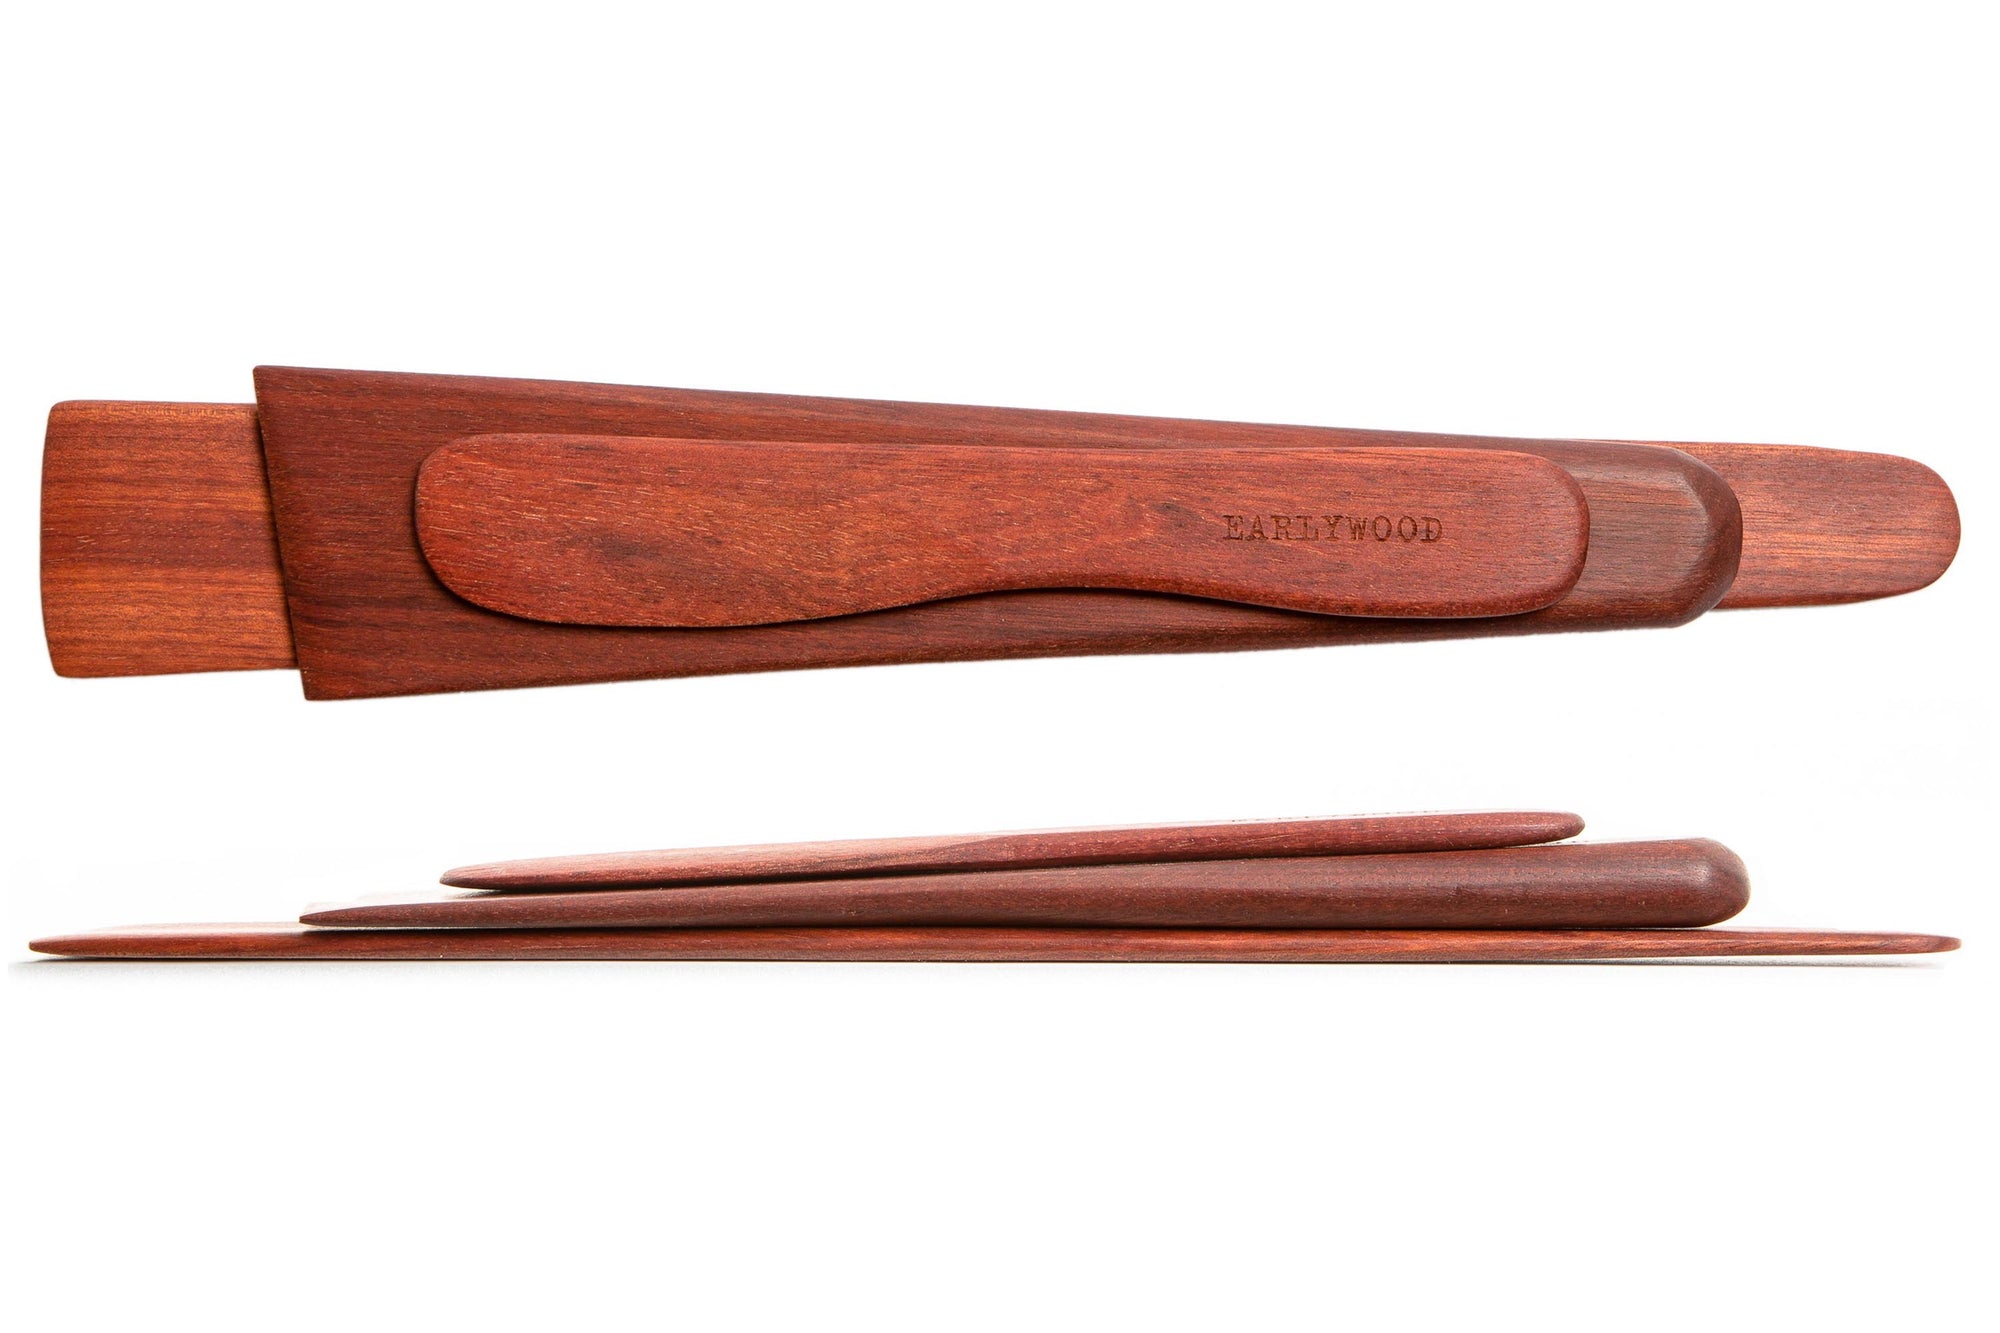 hardwood cast iron utensil set - Earlywood trifecta bloodwood